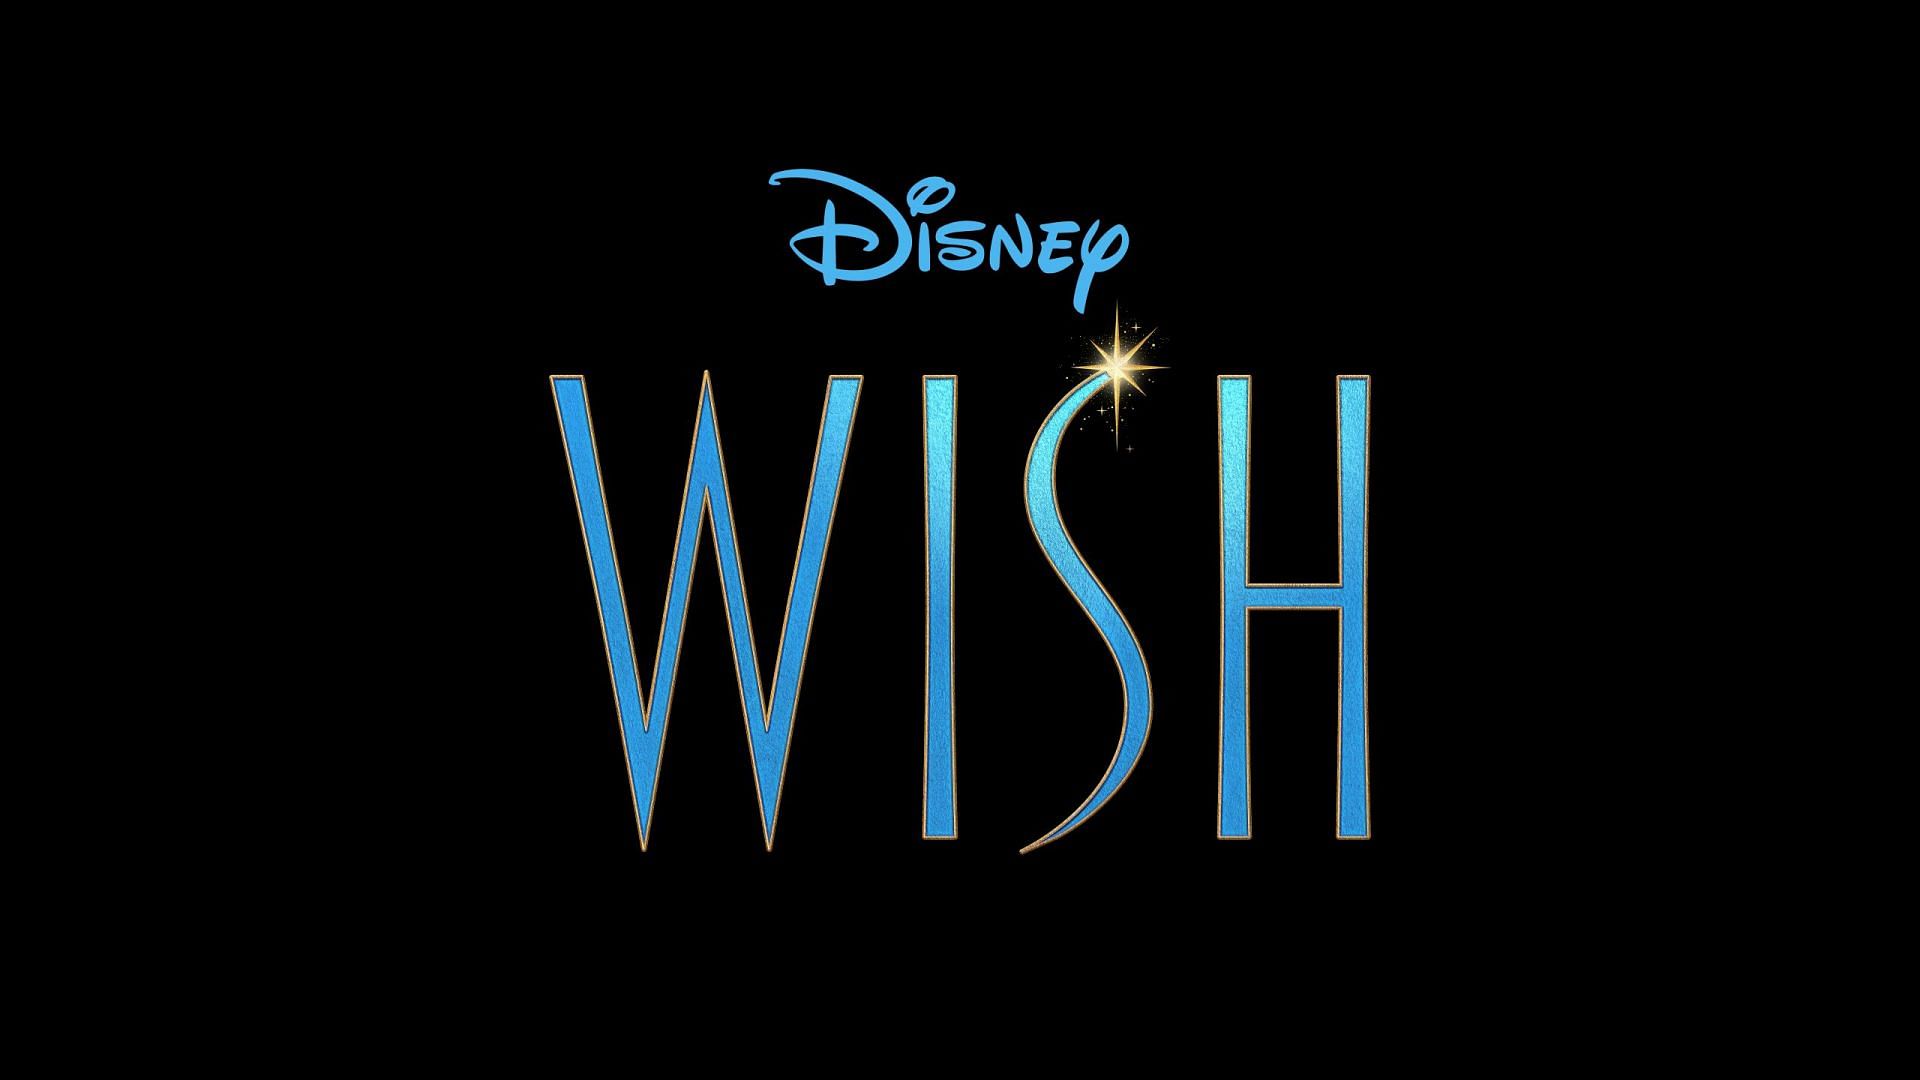 Wish (Image via Walt Disney Studios)